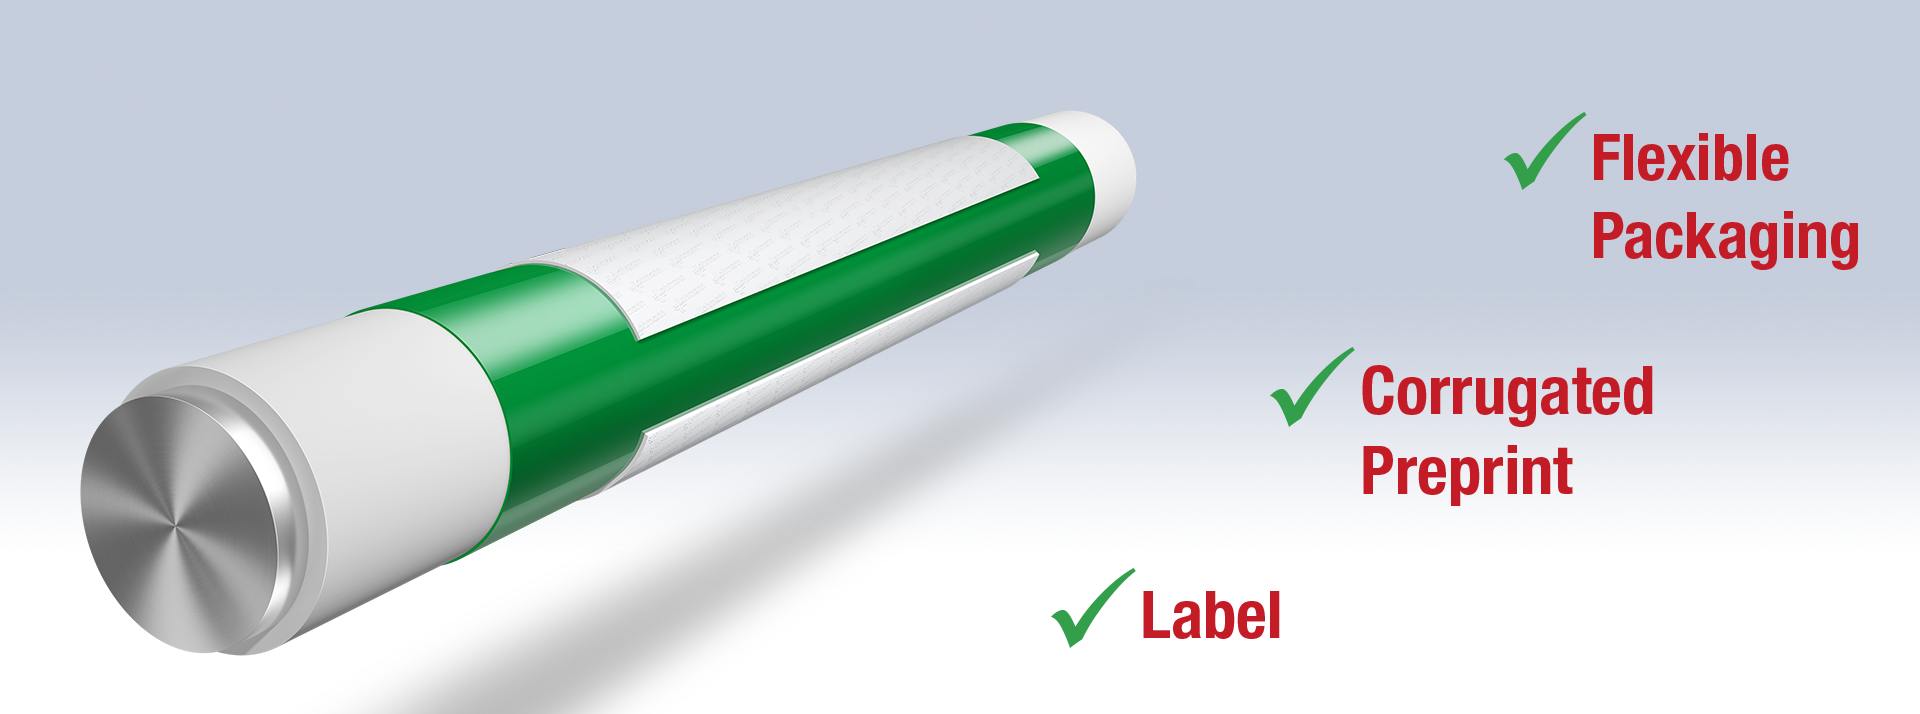 Flexible Packaging
Corrugated Preprint
Label